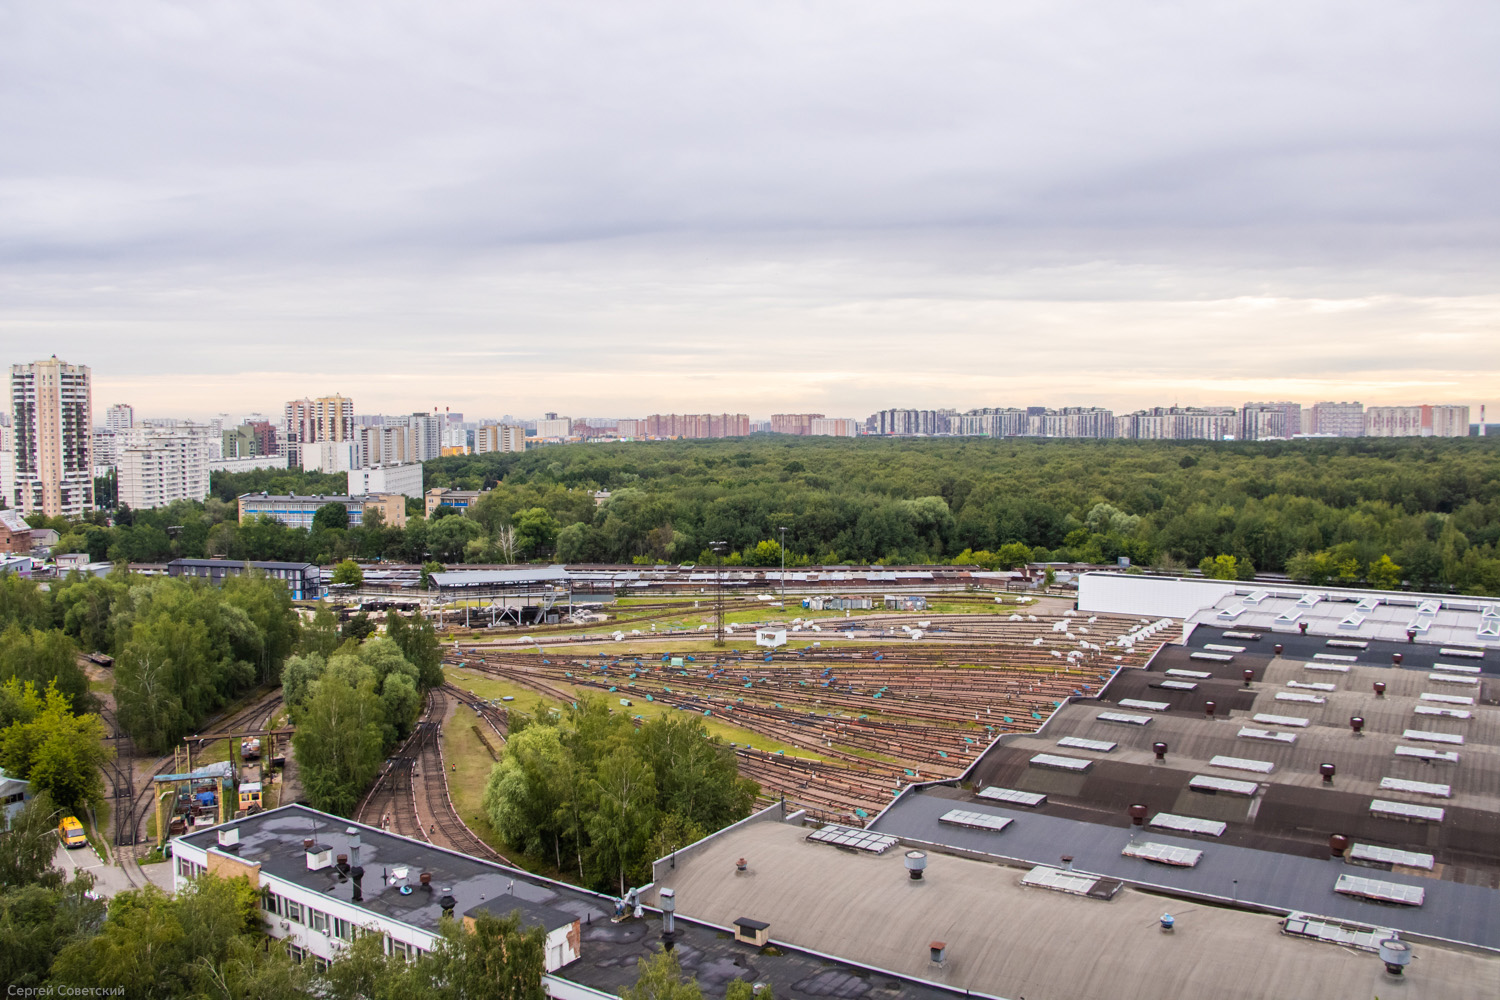 Maskva — Metro — [7] Tagansko-Krasnopresnenskaya Line; Maskva — Views from a height